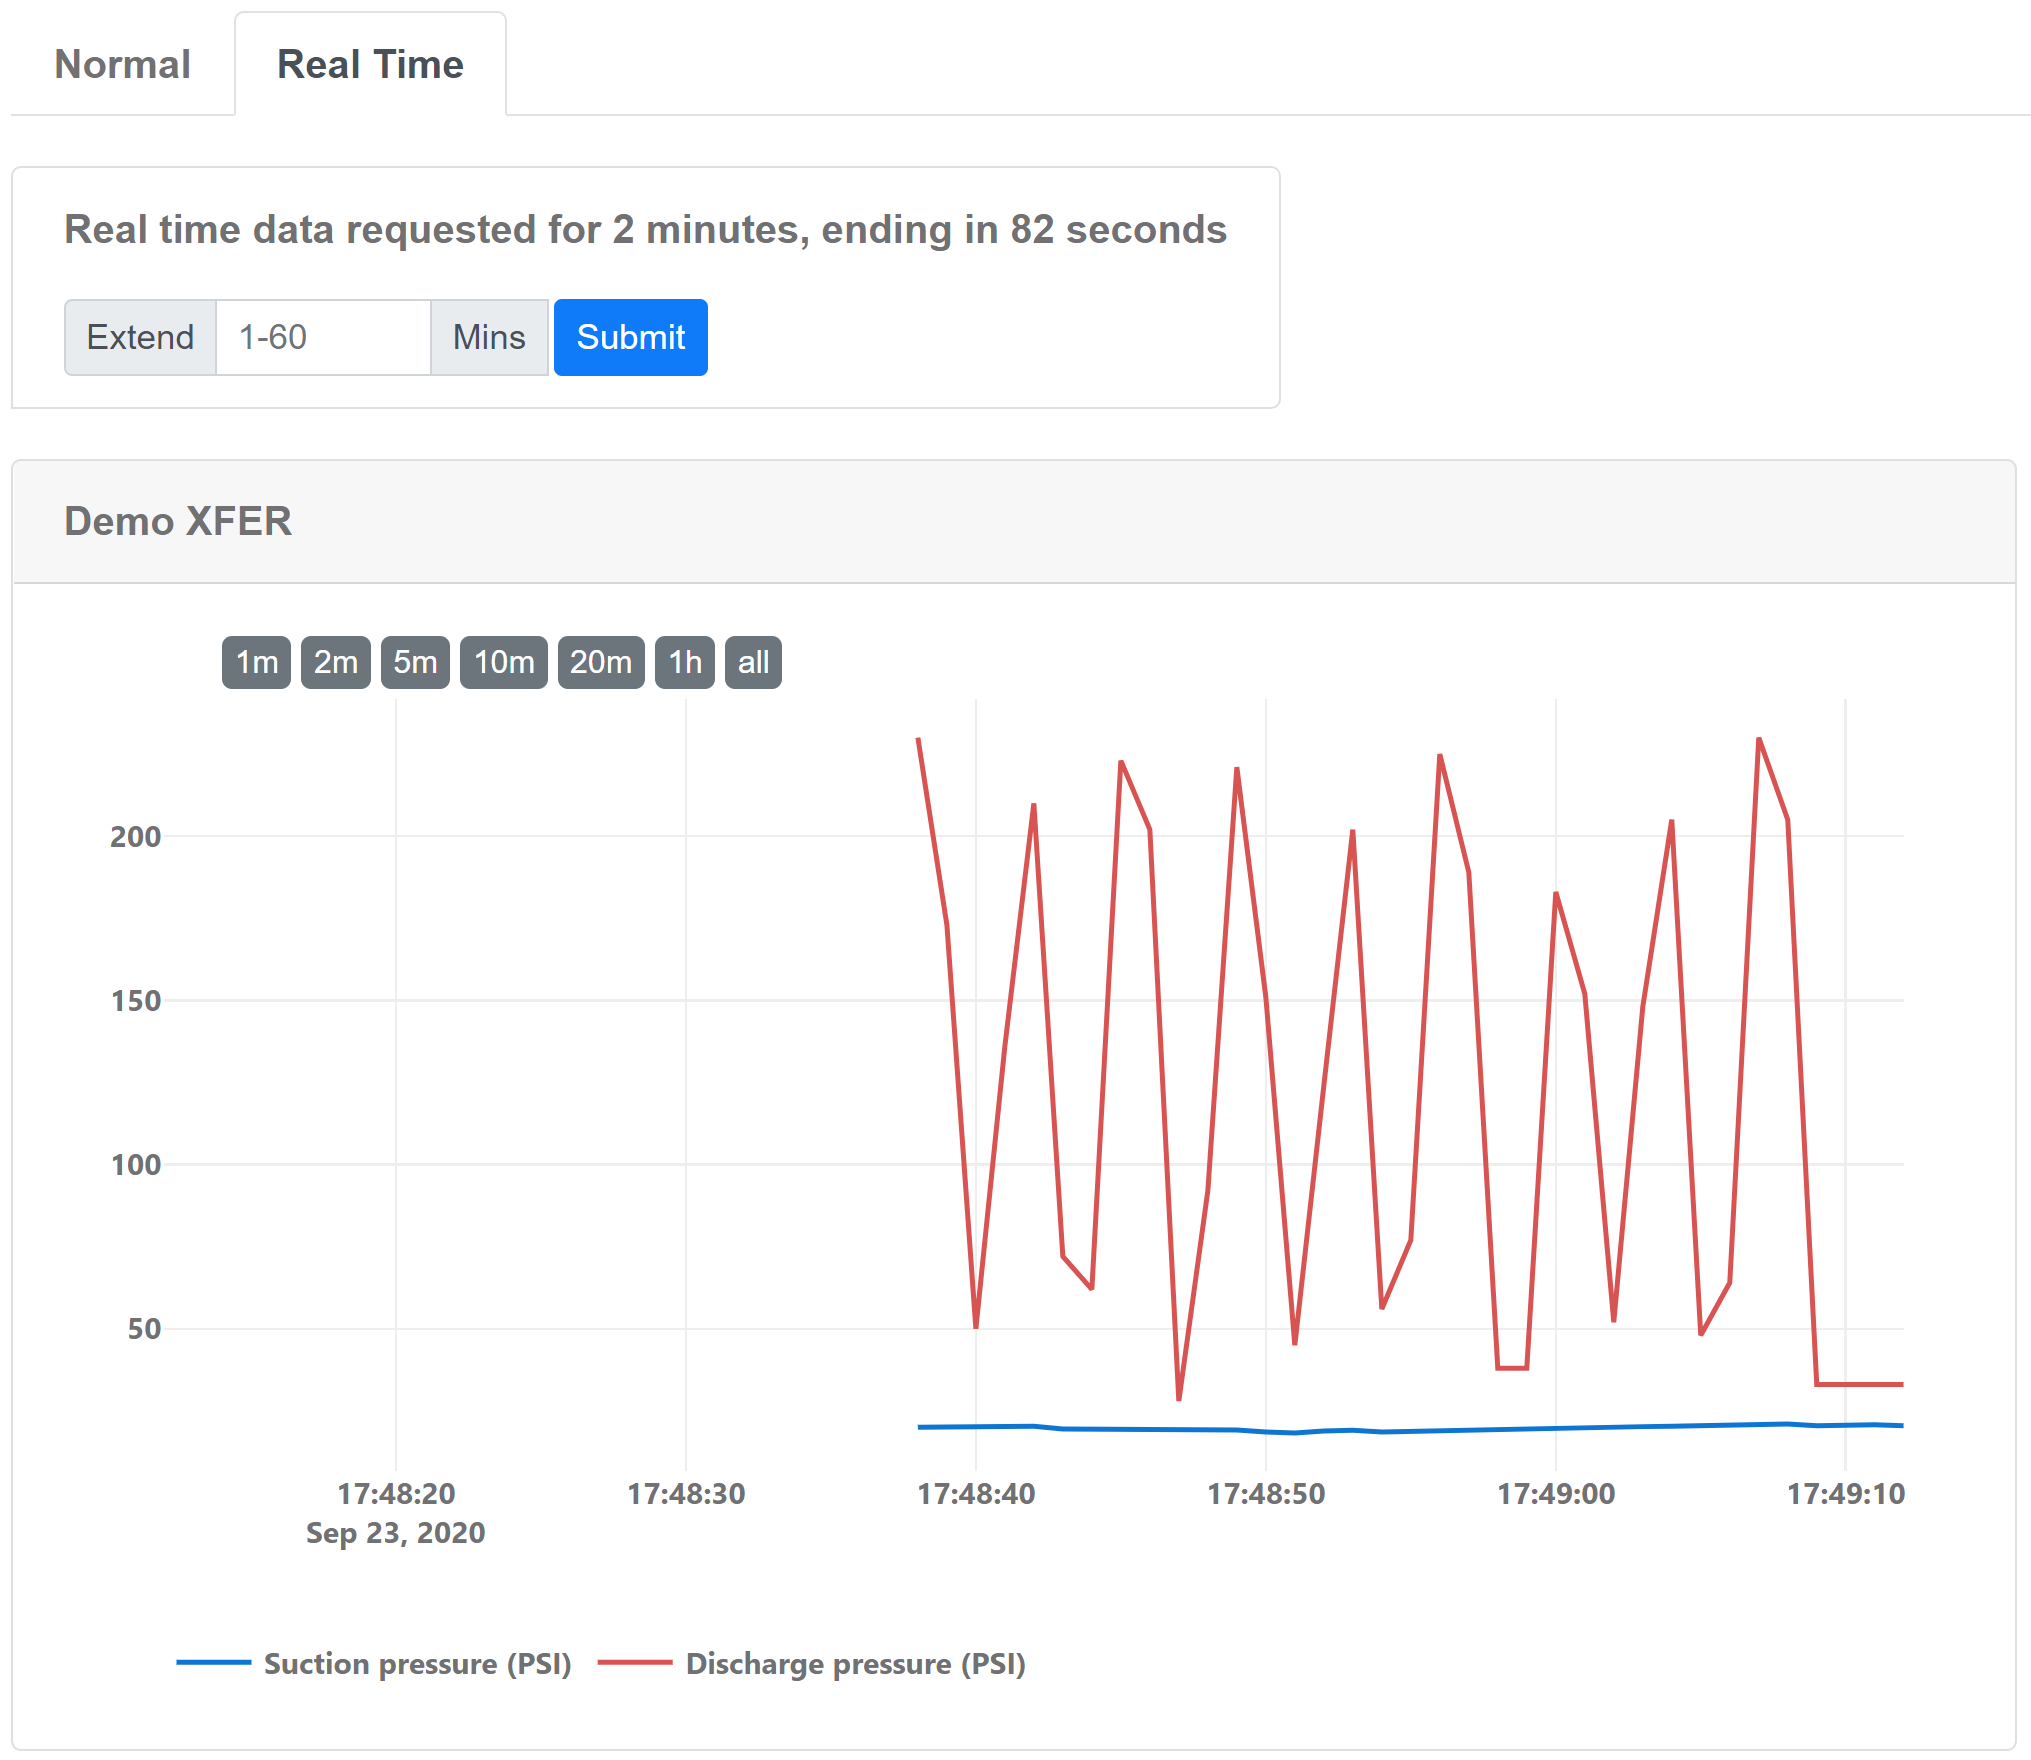 IJACK RCOM charts - real time data